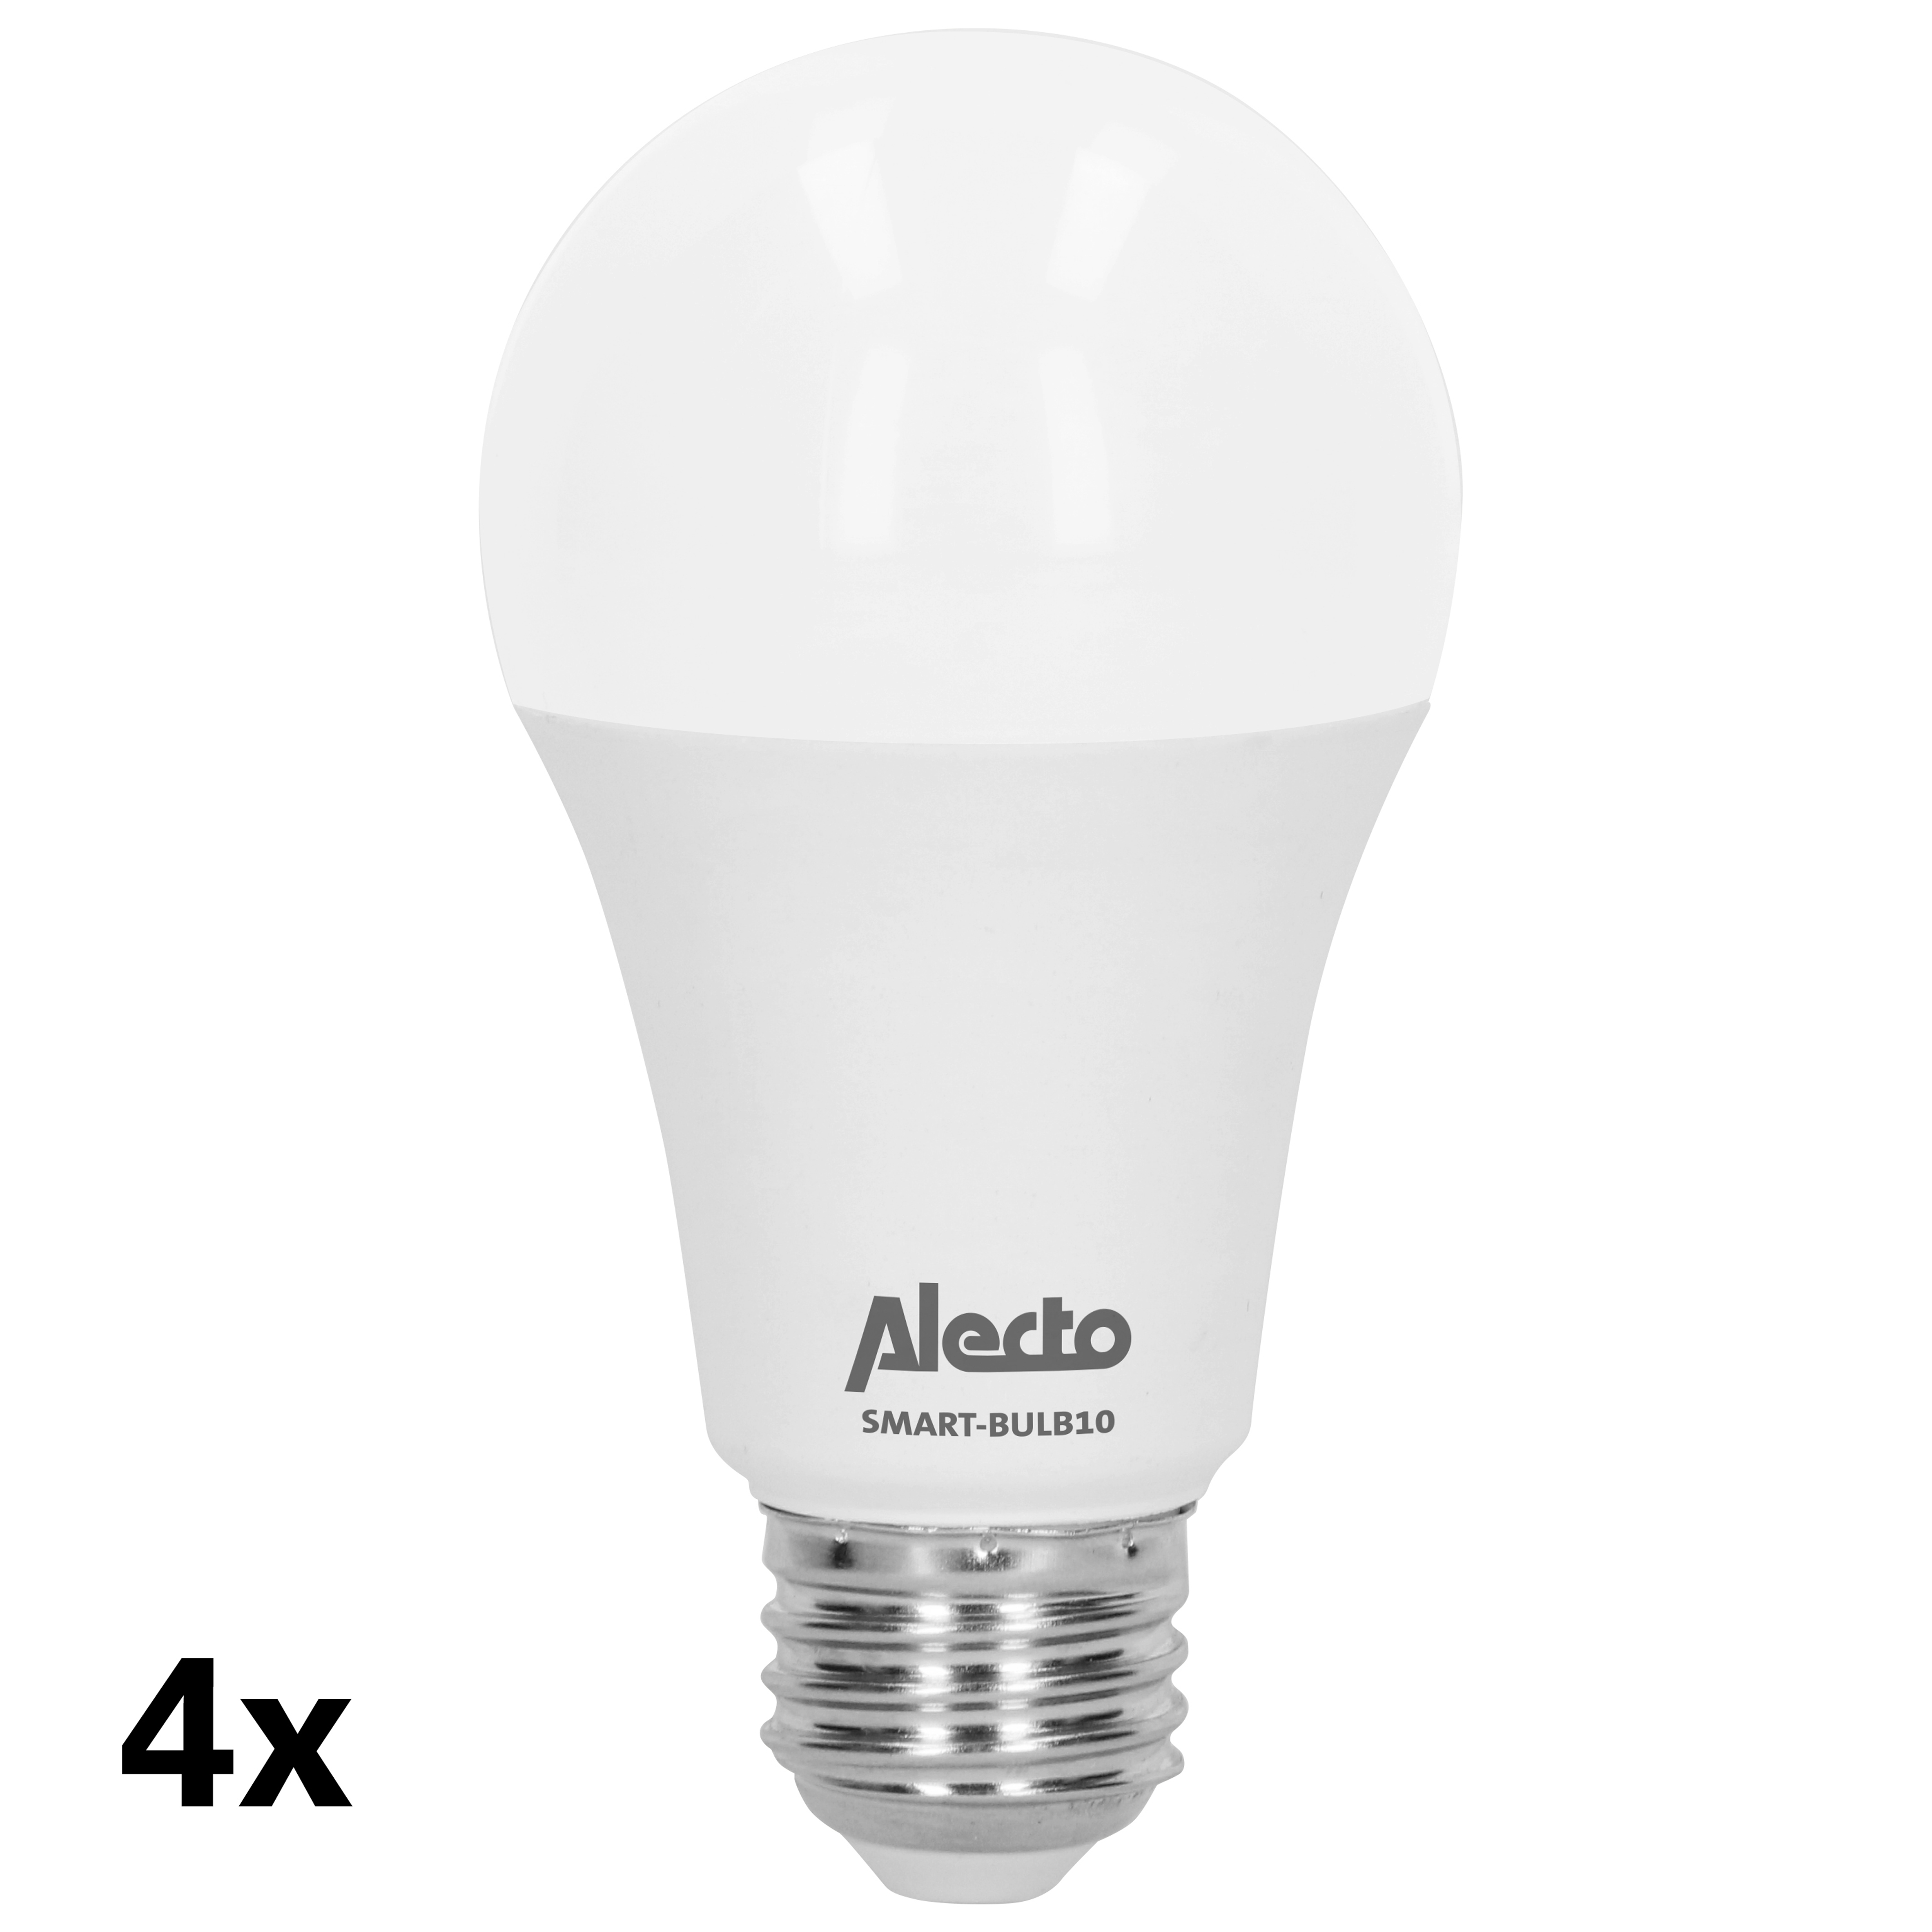 Weiß E27-Sockel ALECTO smarte,mehrfarbige 4-PACK - mit SMART-BULB10 Weiß,RGB,Sehr Kaltes WLAN-LED-Glühlampen Weiß,Neutrales 4er Weiß,Warmes Pack warmes